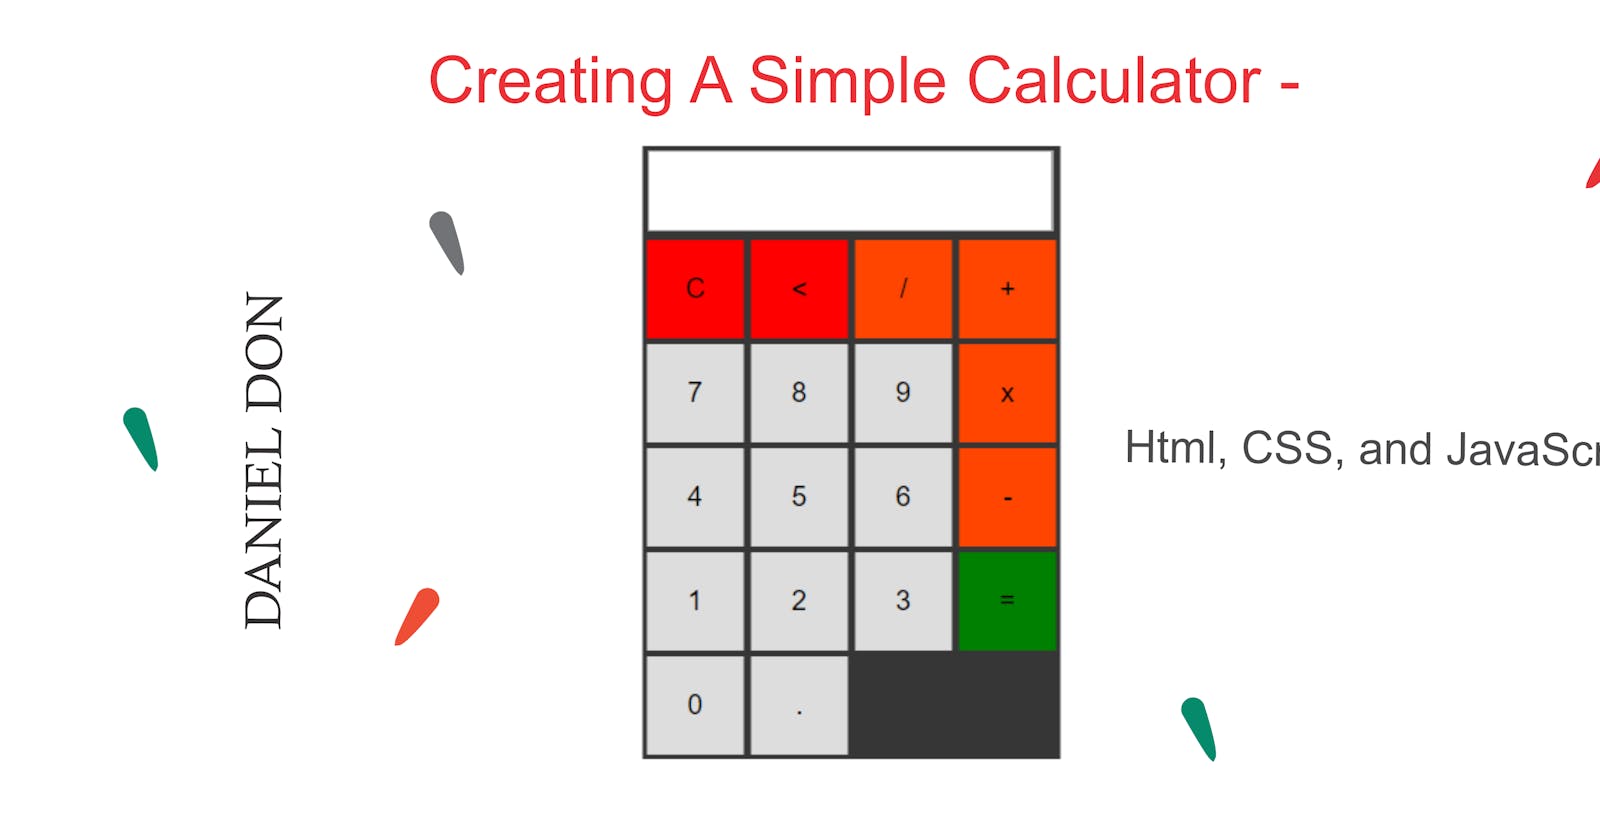 Building a Simple Calculator - Html, CSS, JavaScript